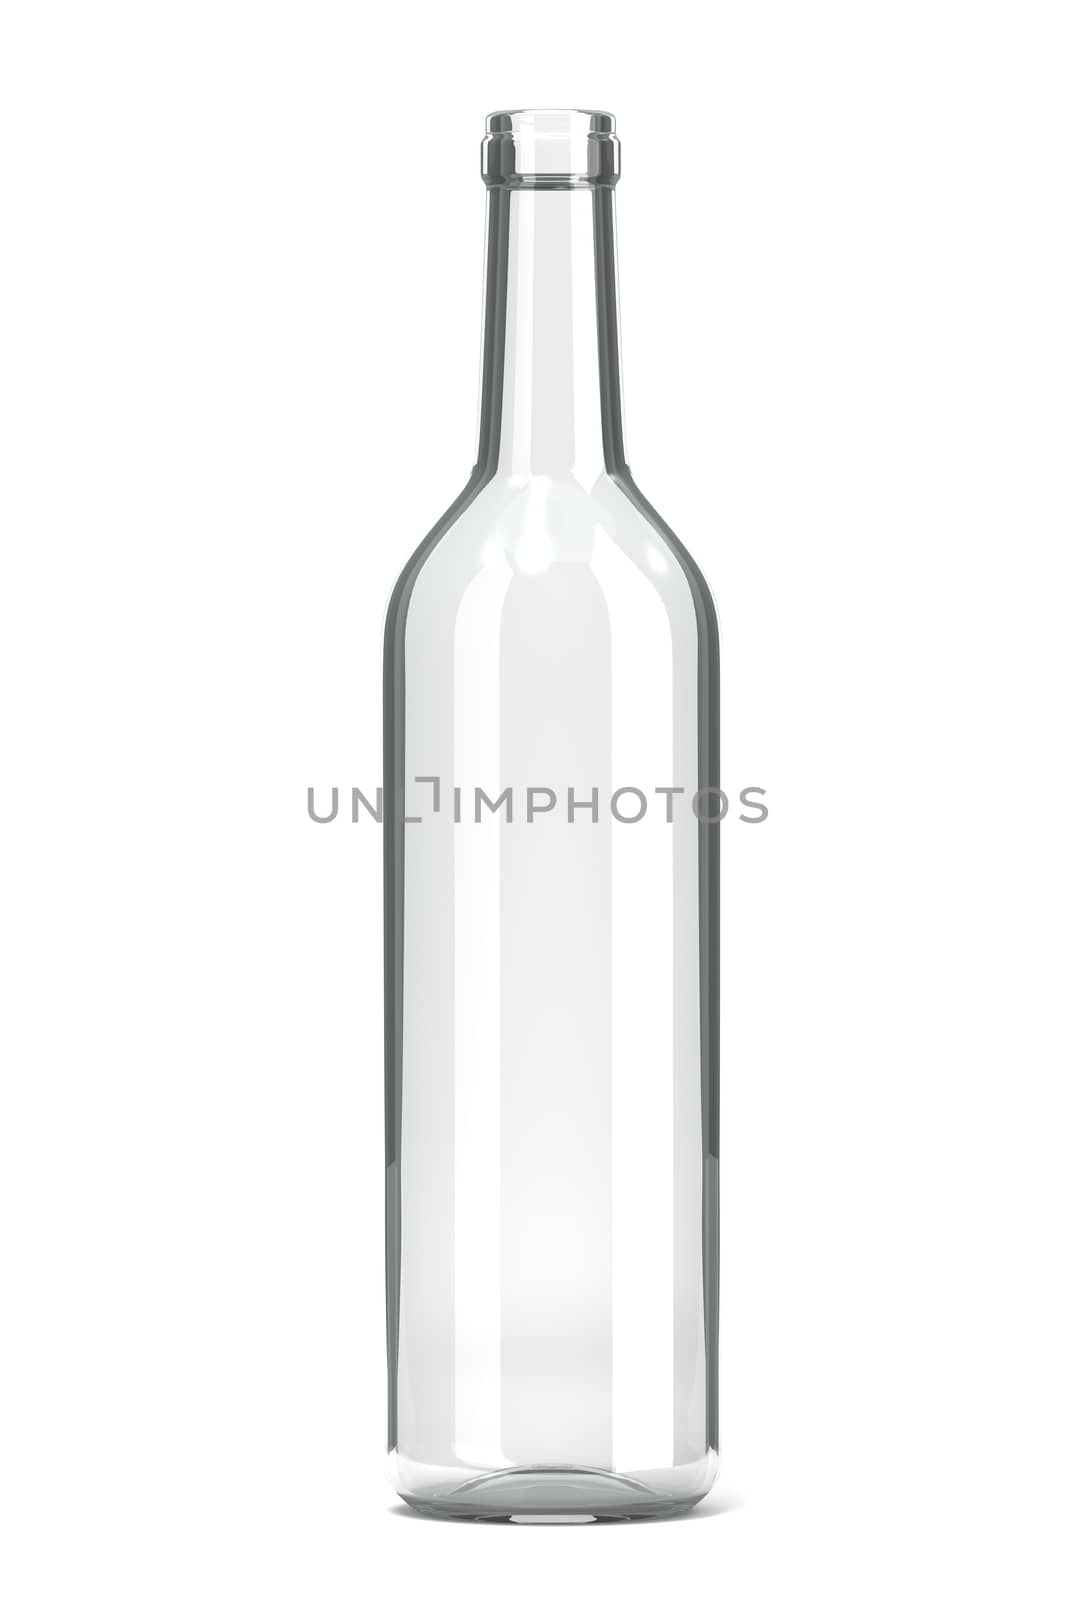 Empty Single Transparent Glass Bottle on White Background